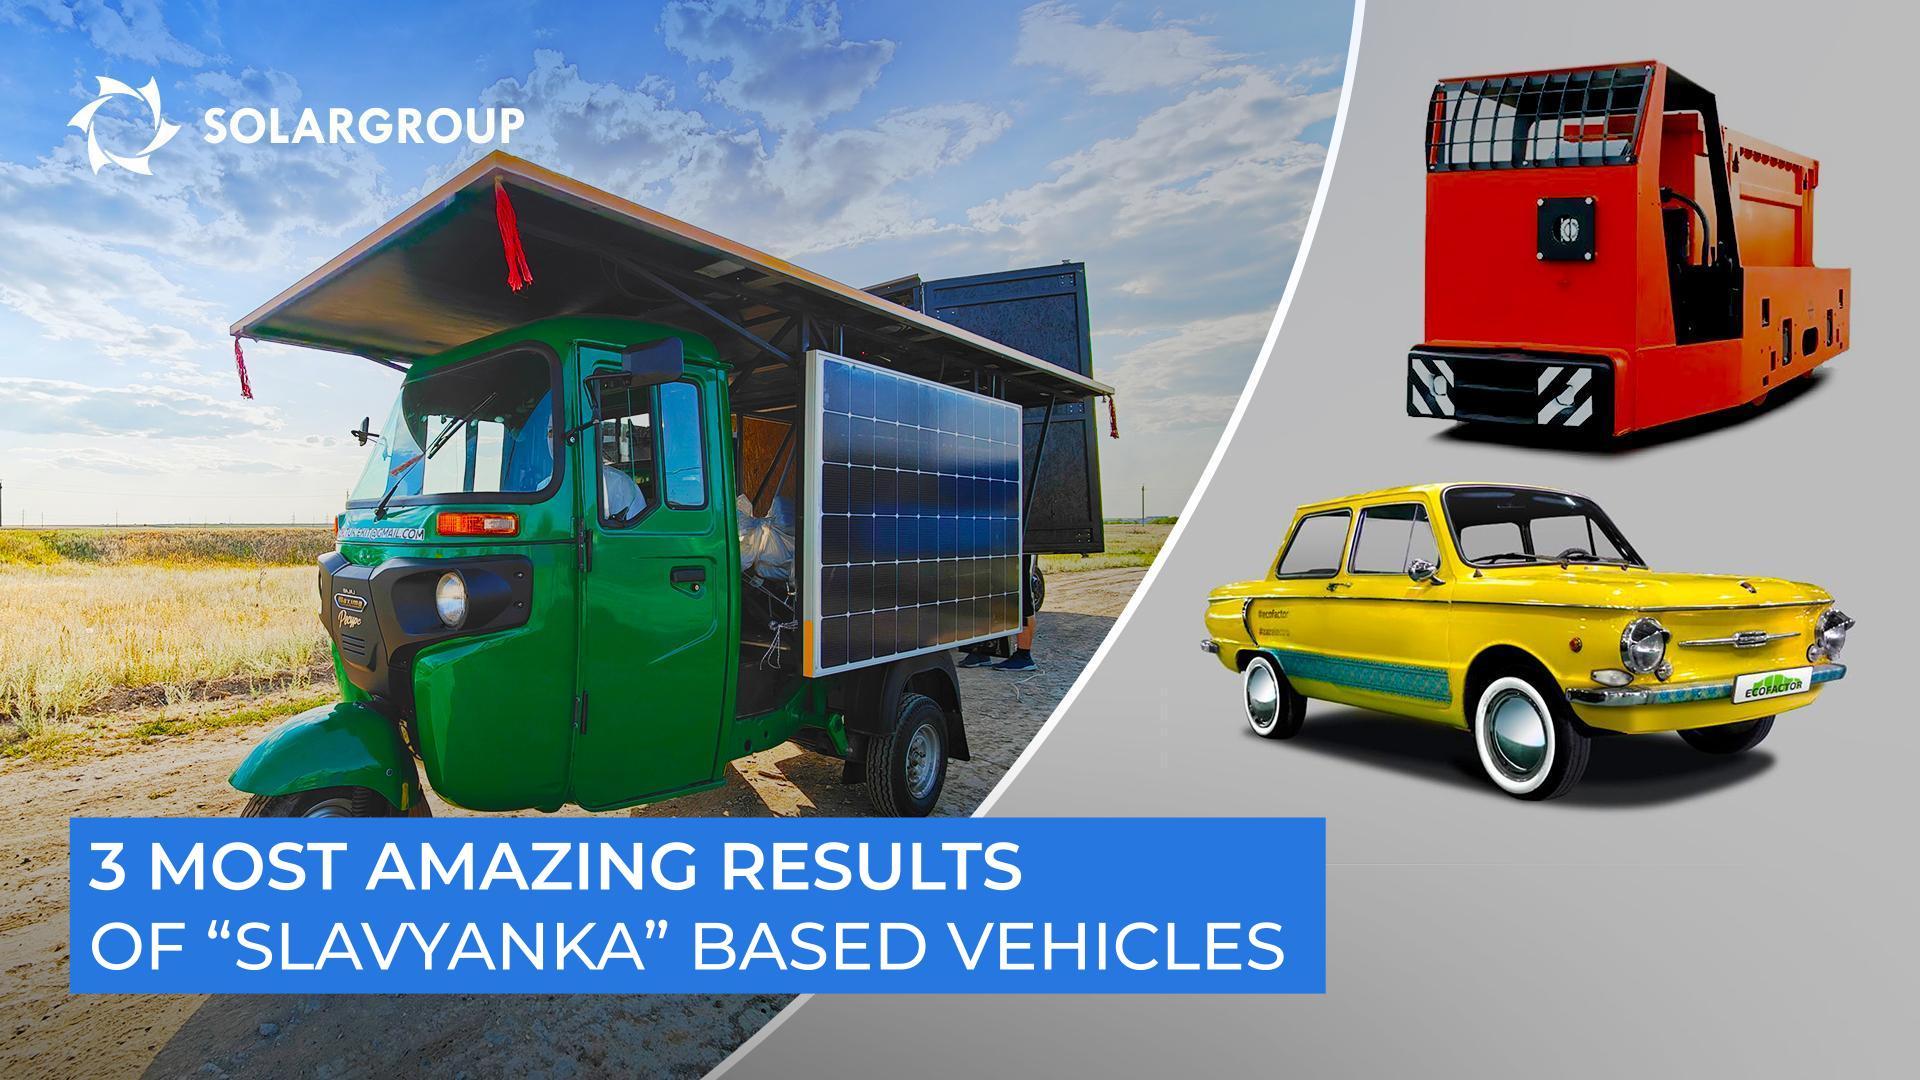 "Slavyanka" based vehicles that impressed in action